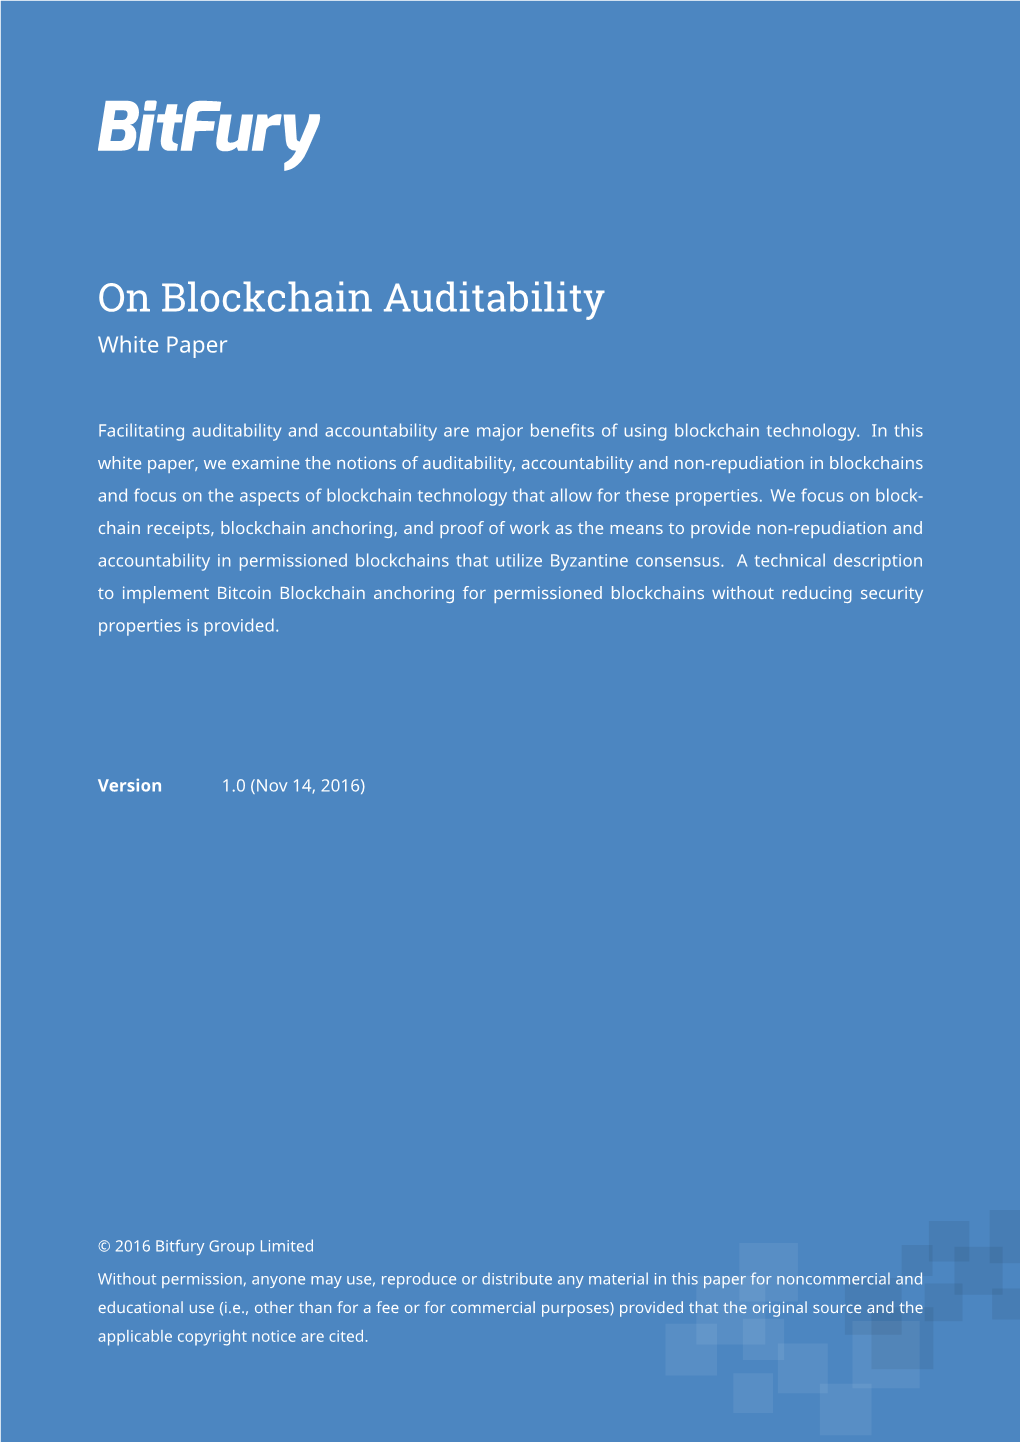 On Blockchain Auditability: White Paper